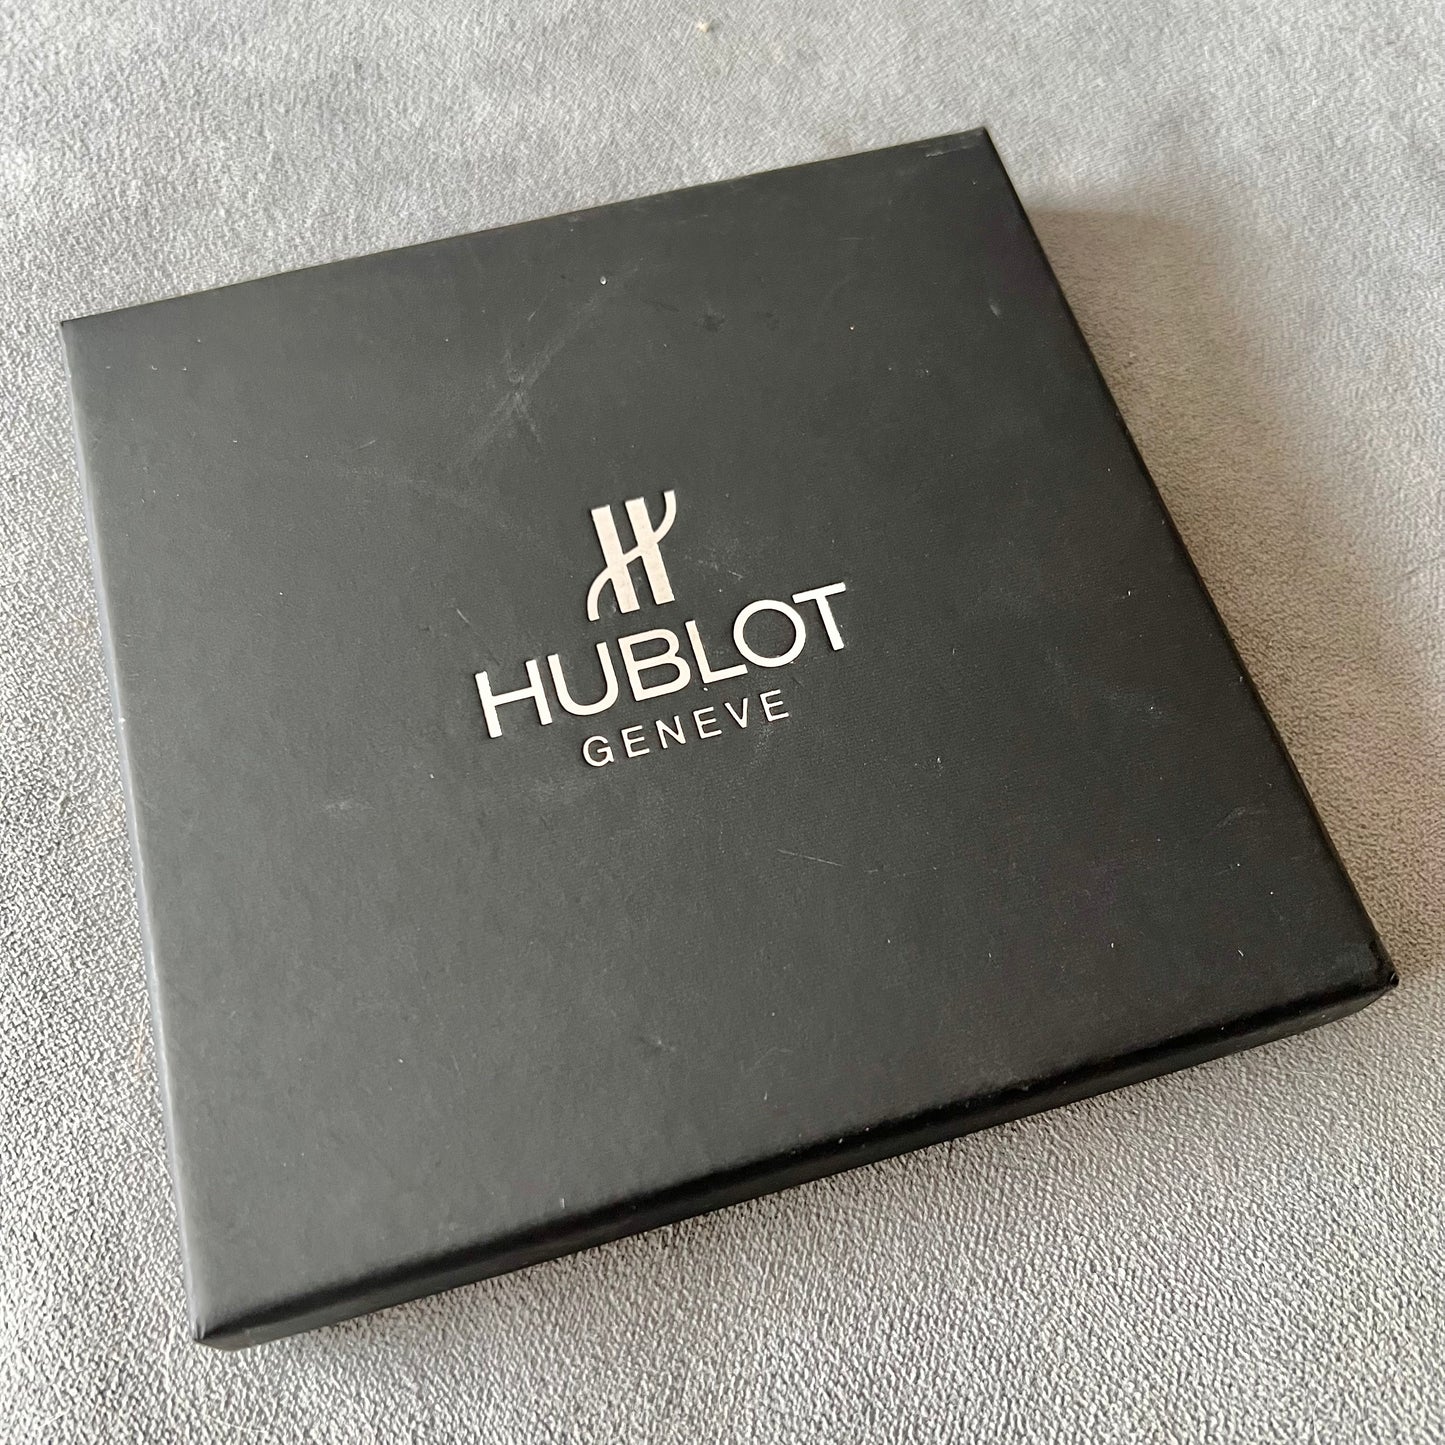 New HUBLOT USB Card Reader in Box 5.25x5.25x0.5 inches